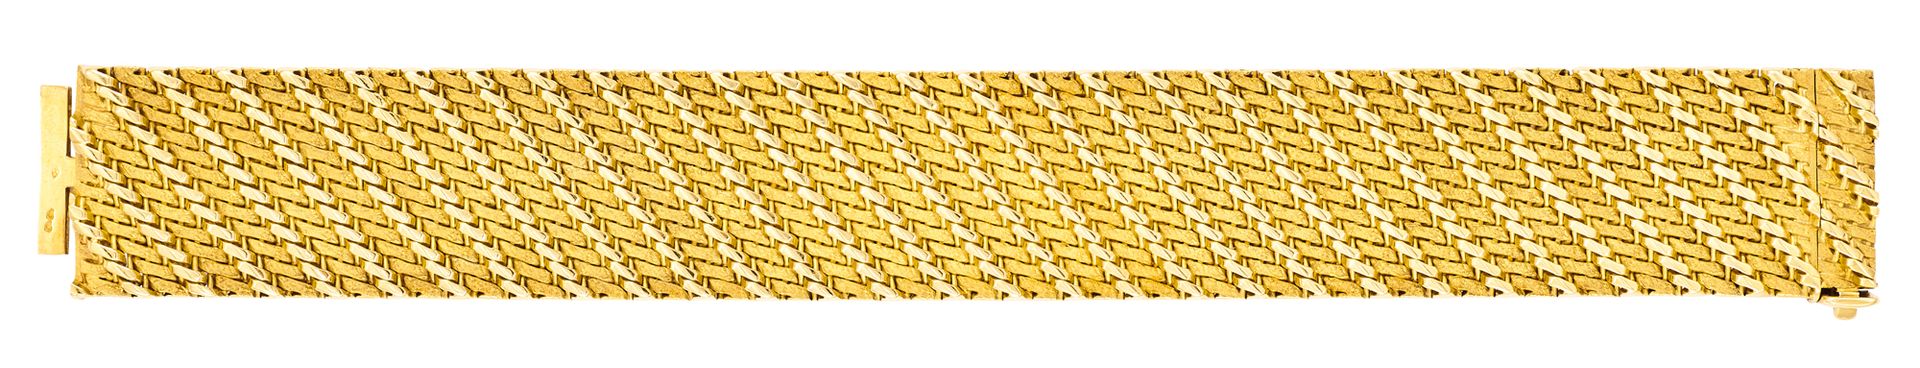 Georges LENFANT 黄金软手镯，弧形 "Milanais "网眼，对角线凸起
法国作品，部分可见大师印记 
长：18.2 厘米 - 宽：2.3 厘米&hellip;